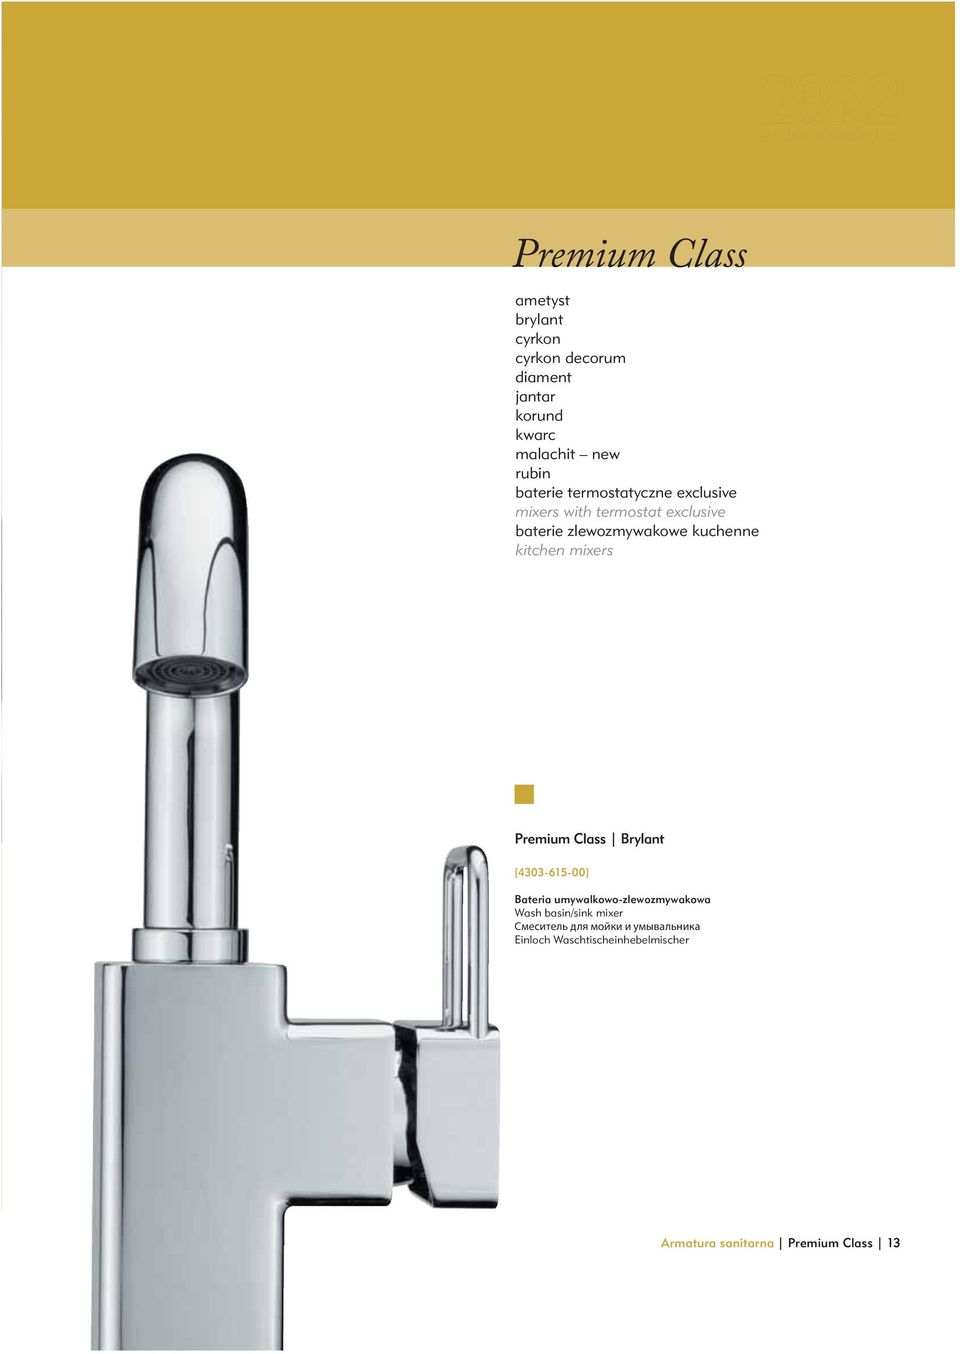 kitchen mixers Premium Class Brylant [4303-615-00] Bateria umywalkowo-zlewozmywakowa Wash basin/sink